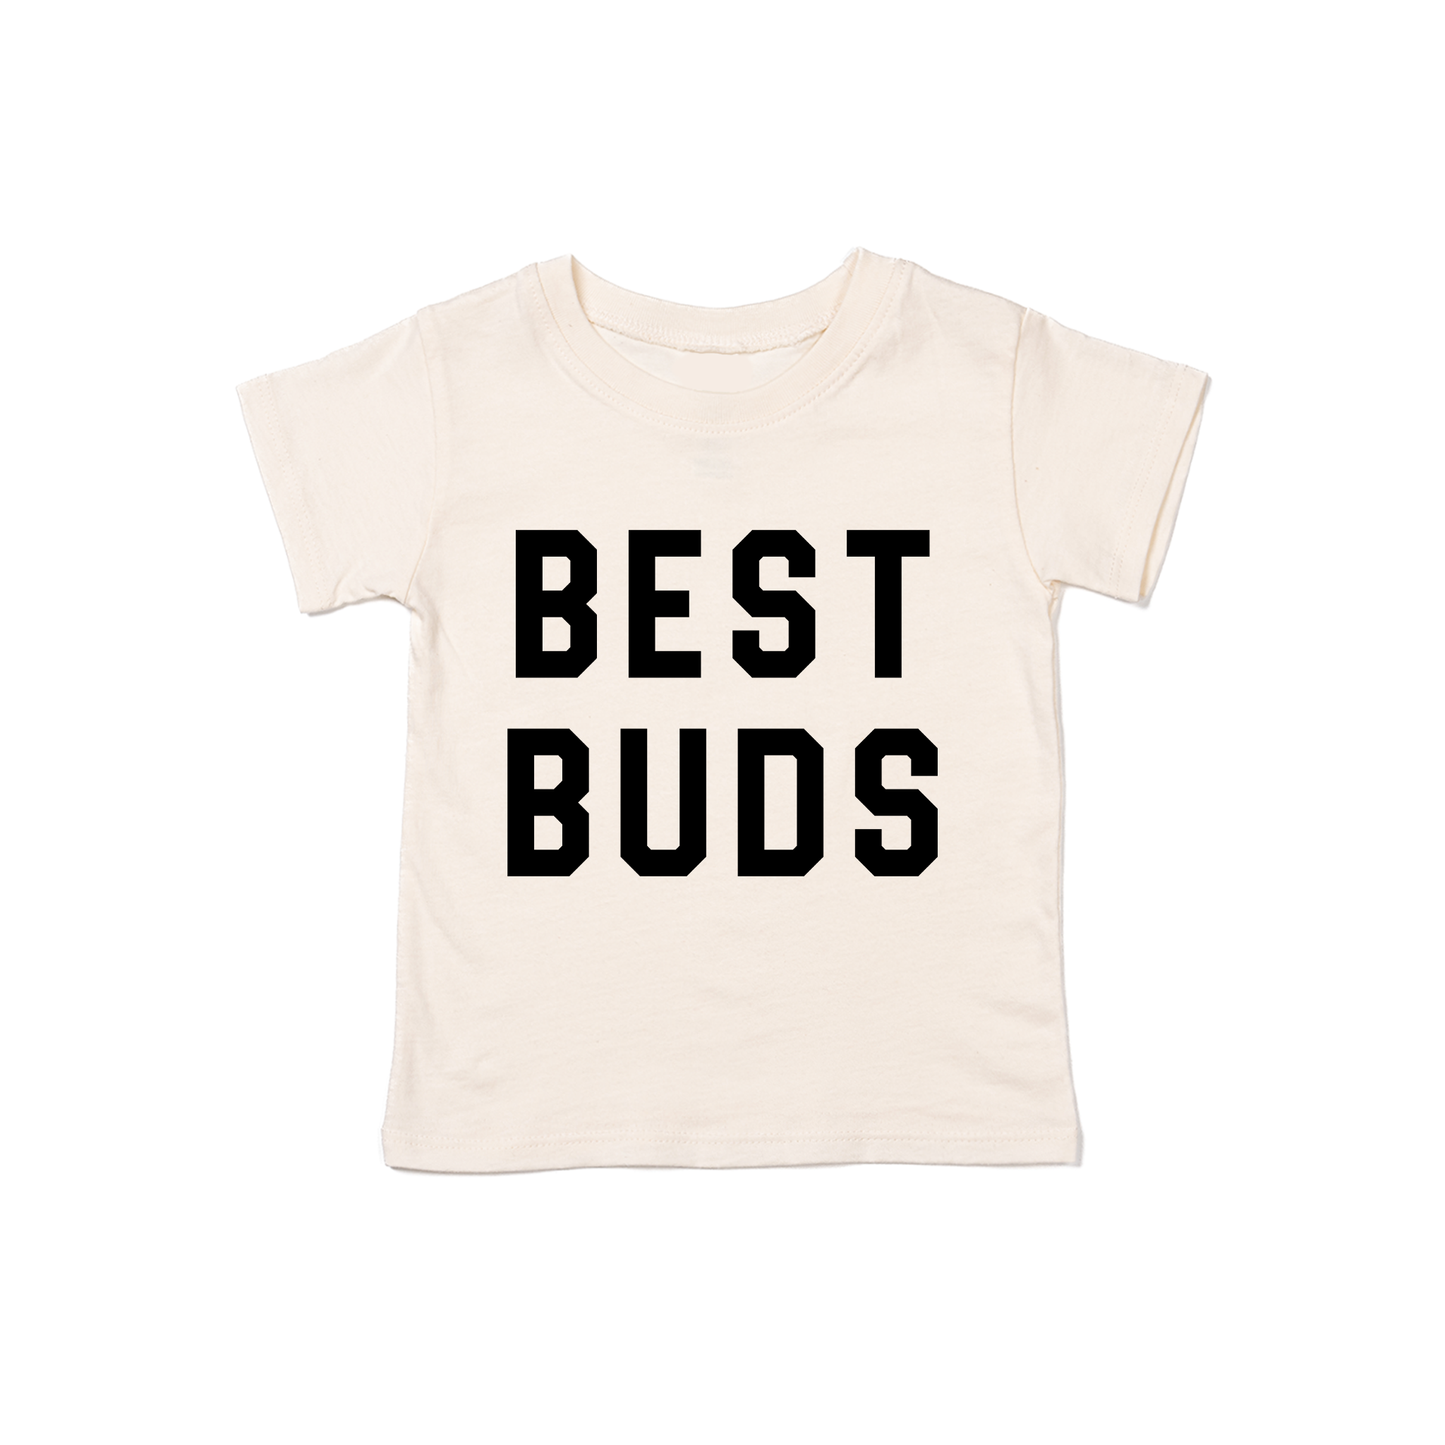 Best Buds (Black) - Kids Tee (Natural)